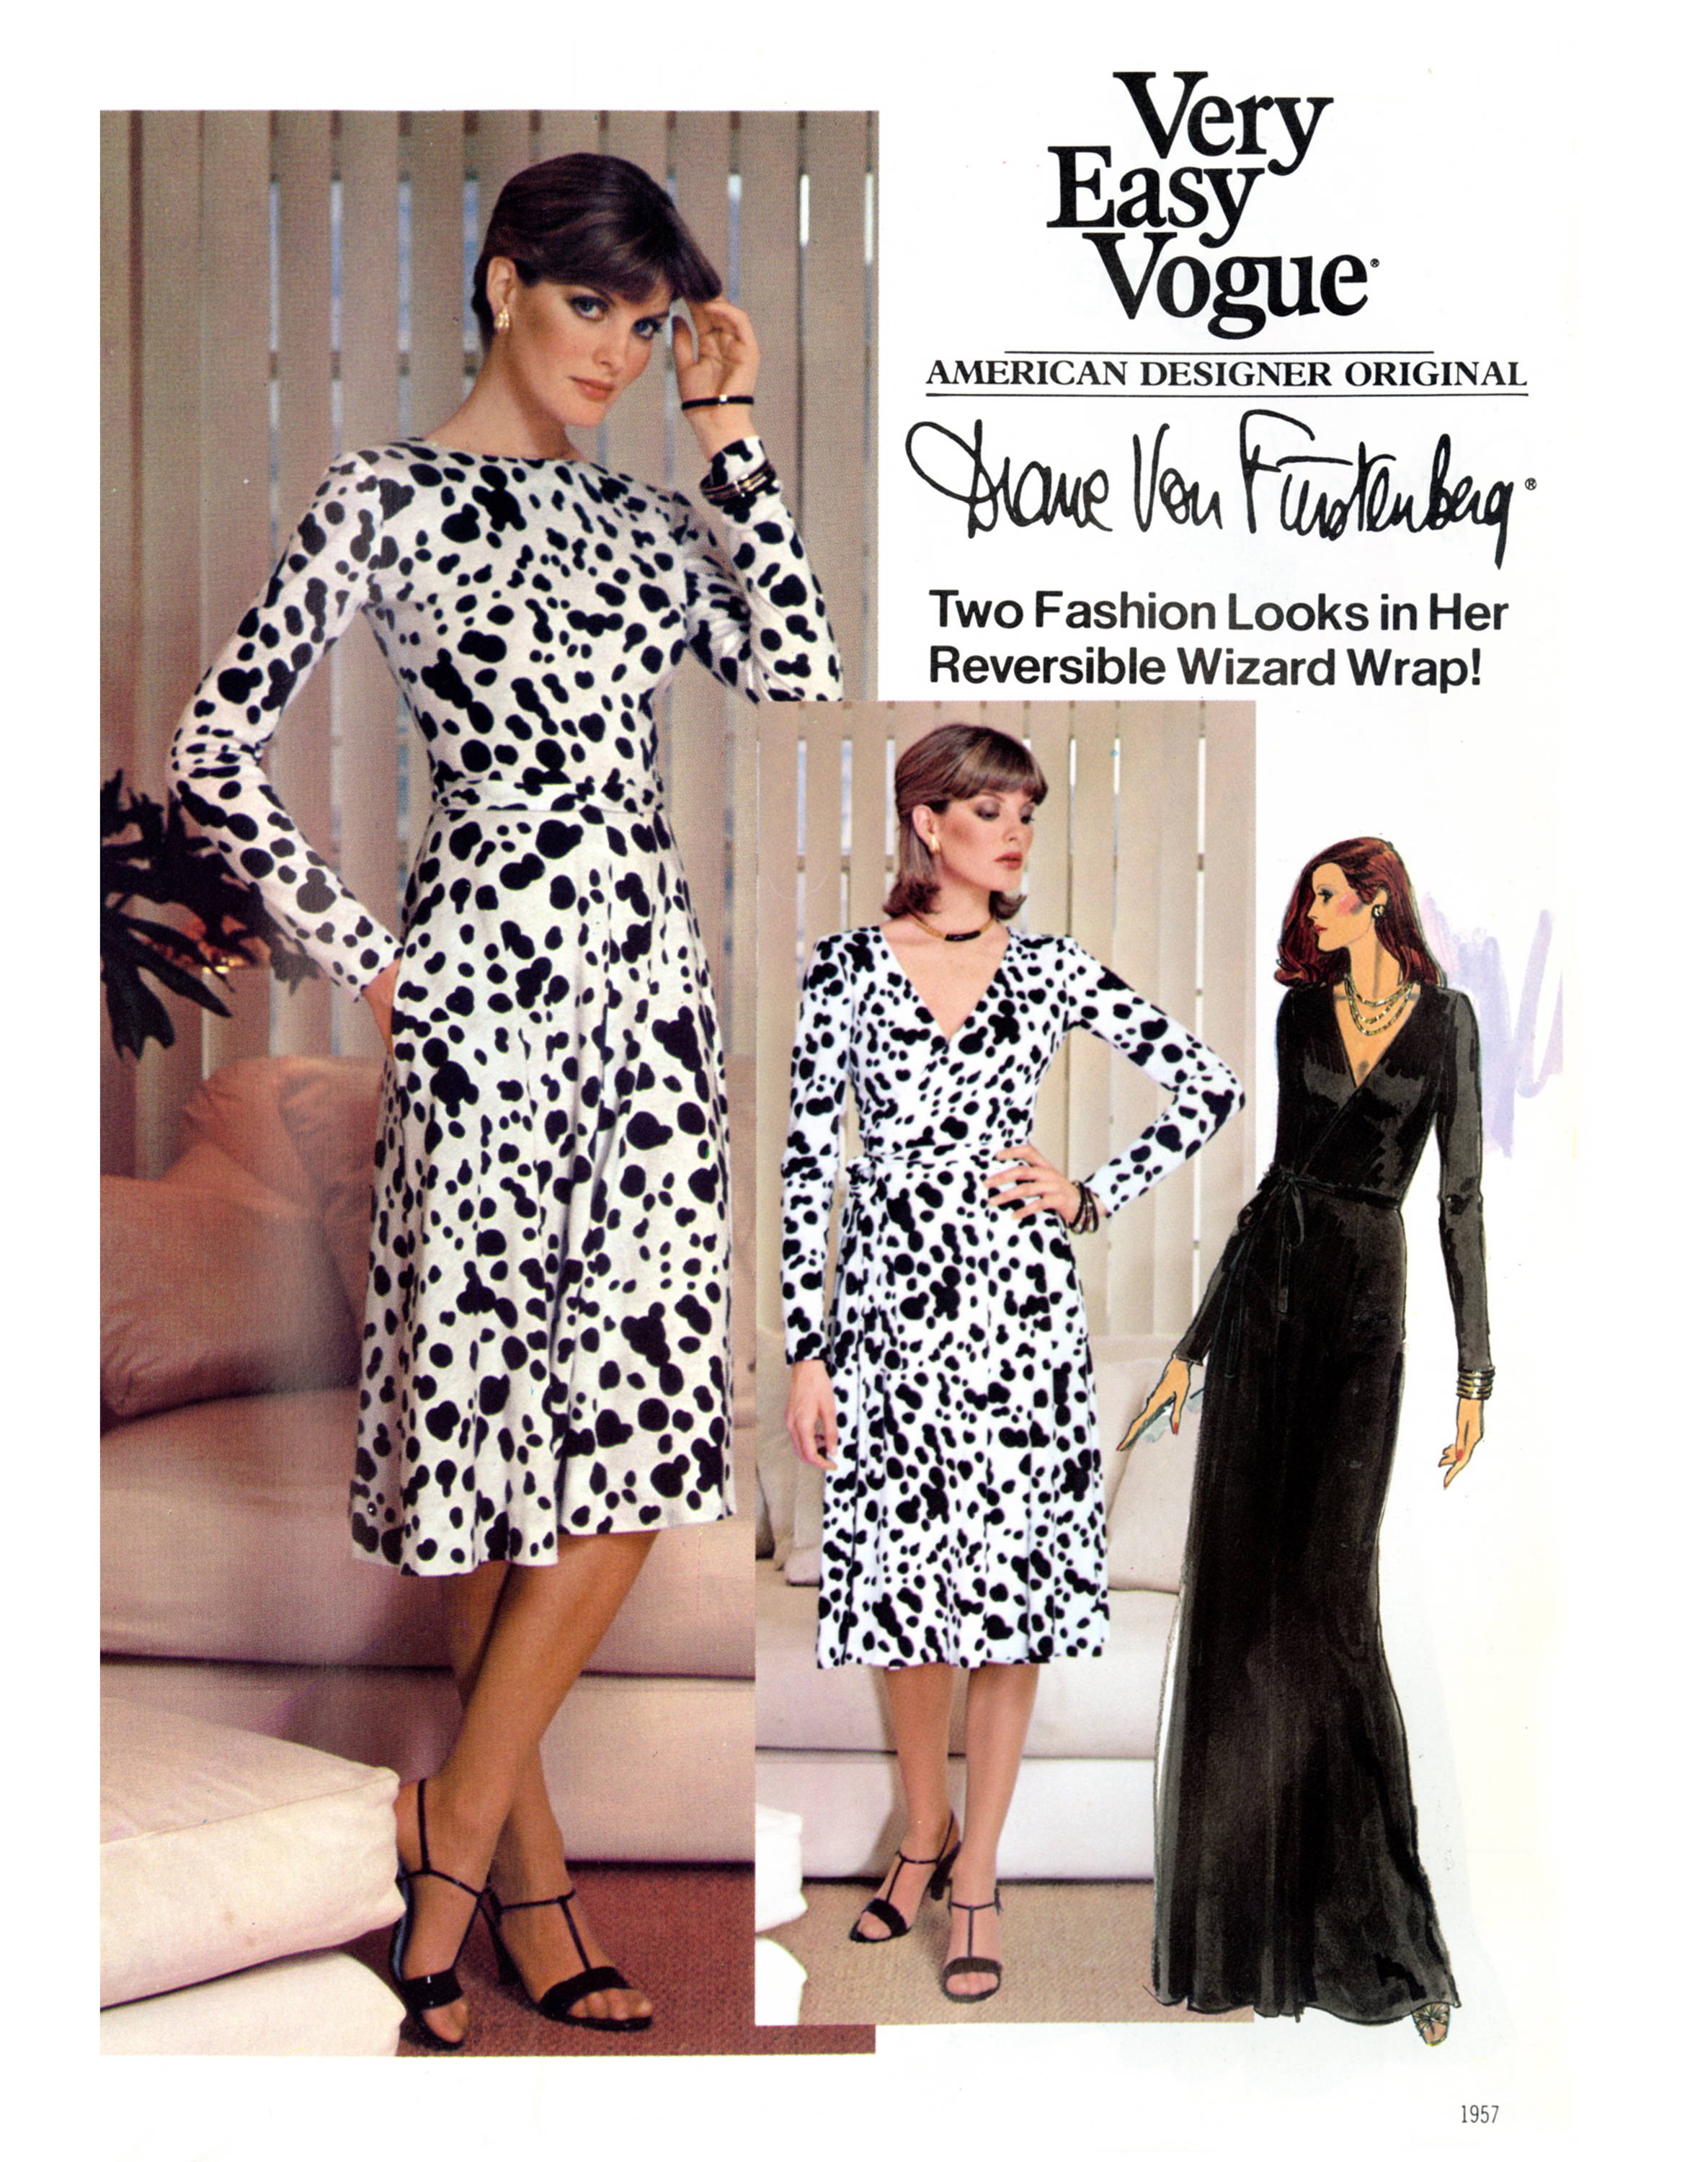 Very Easy Vogue American Designer Original by Diane von Furstenberg | Two Fashion Looks in Her Reversible Wizard Wrap!